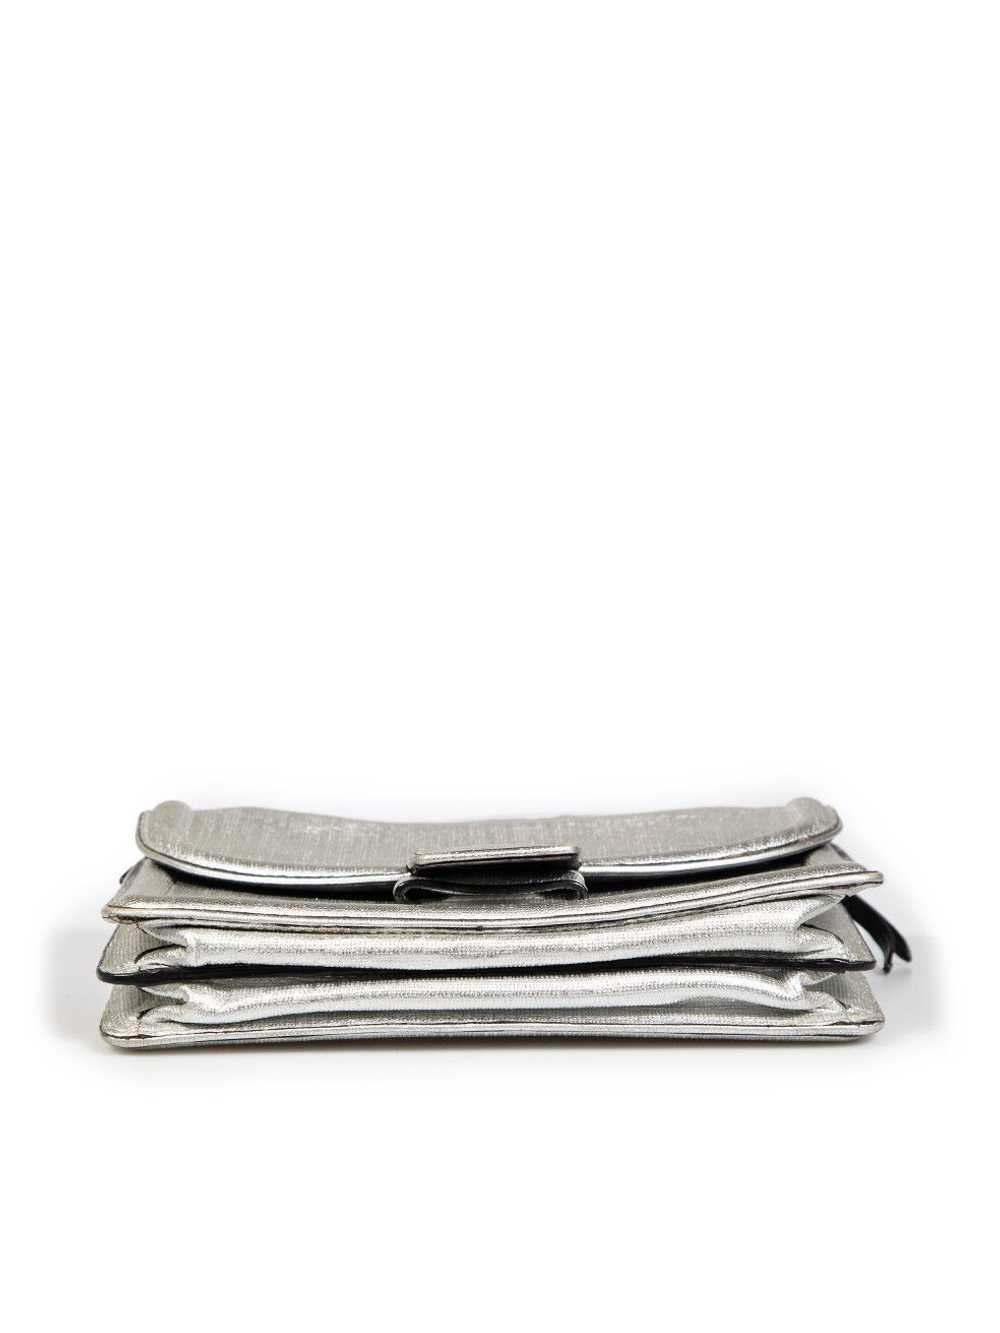 Dries Van Noten Silver Leather Flap Crossbody Bag - image 4